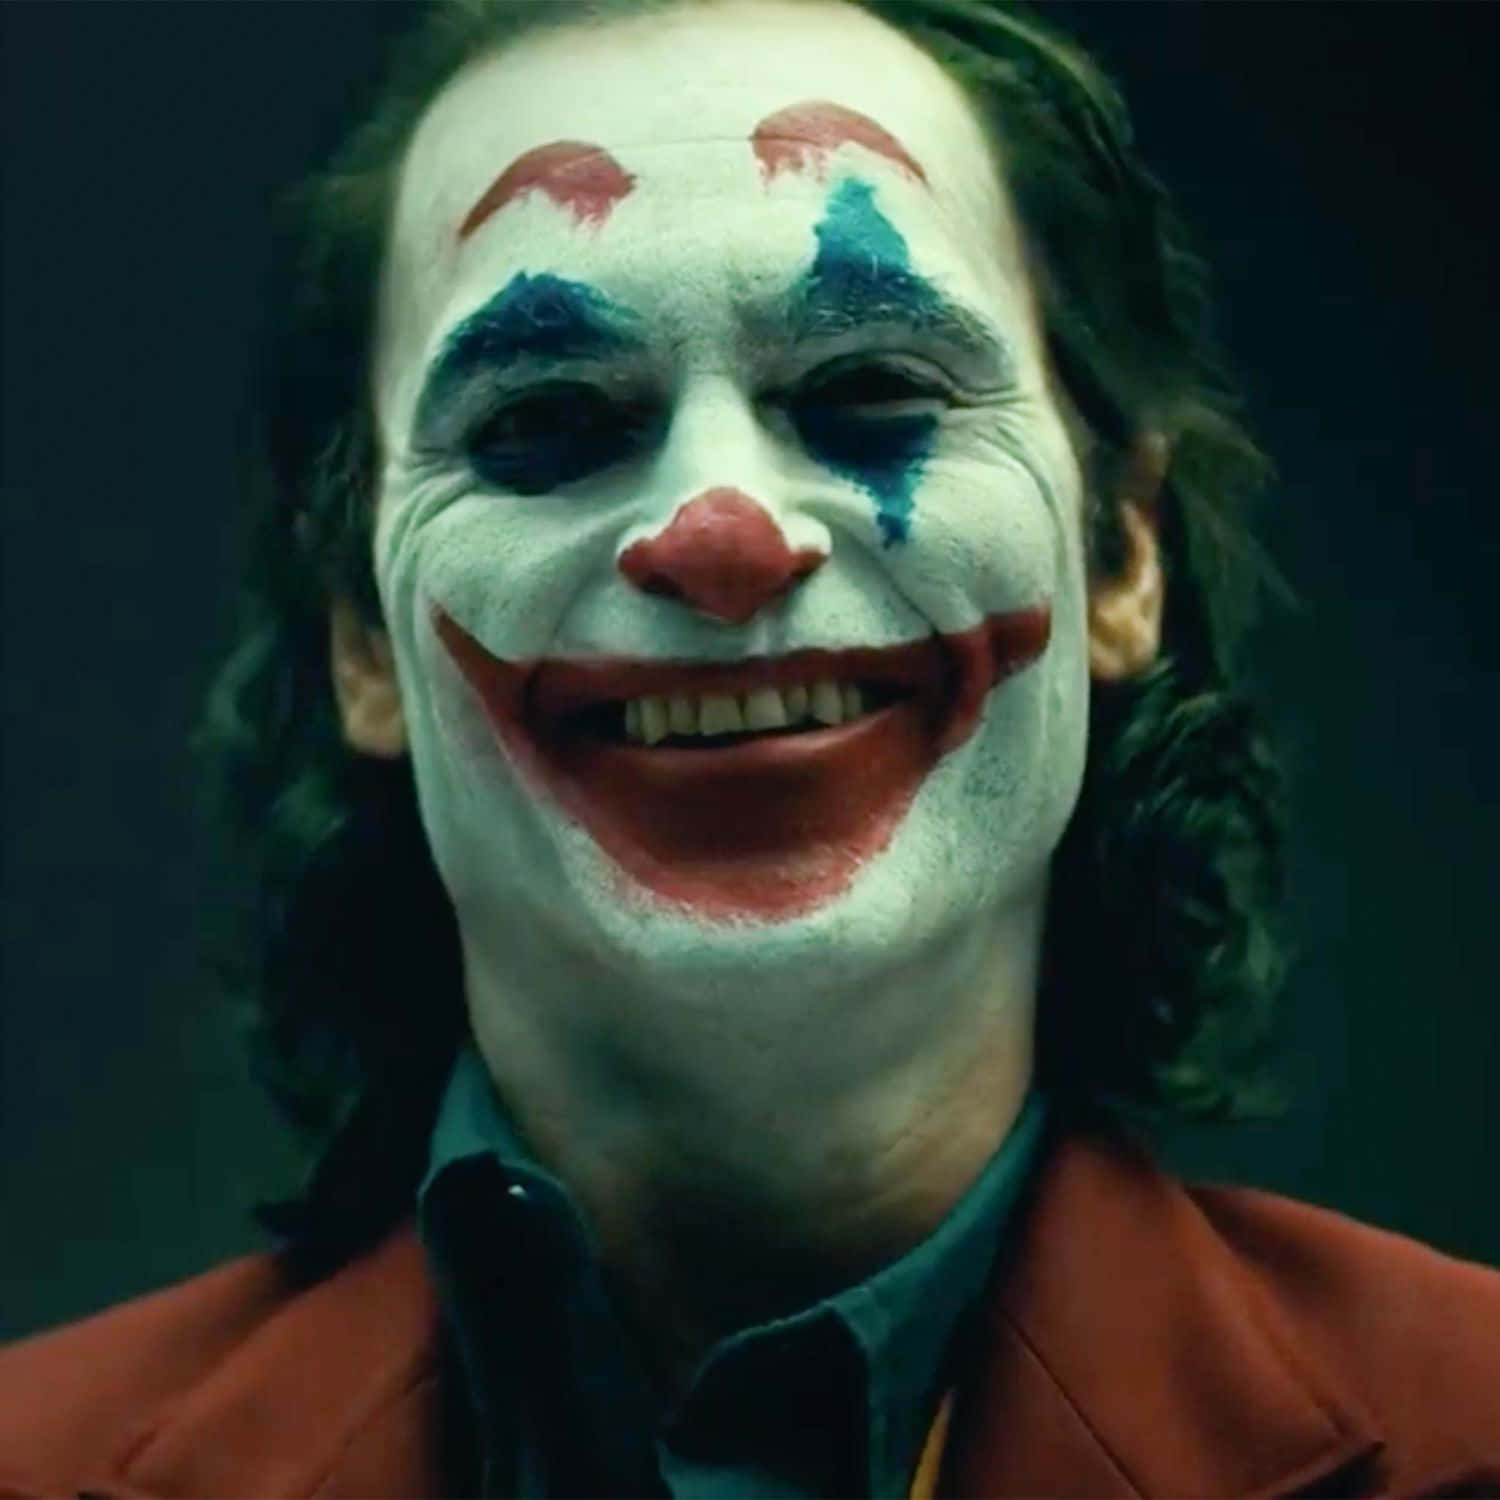 Joker Laughing Maniacally In The Dark